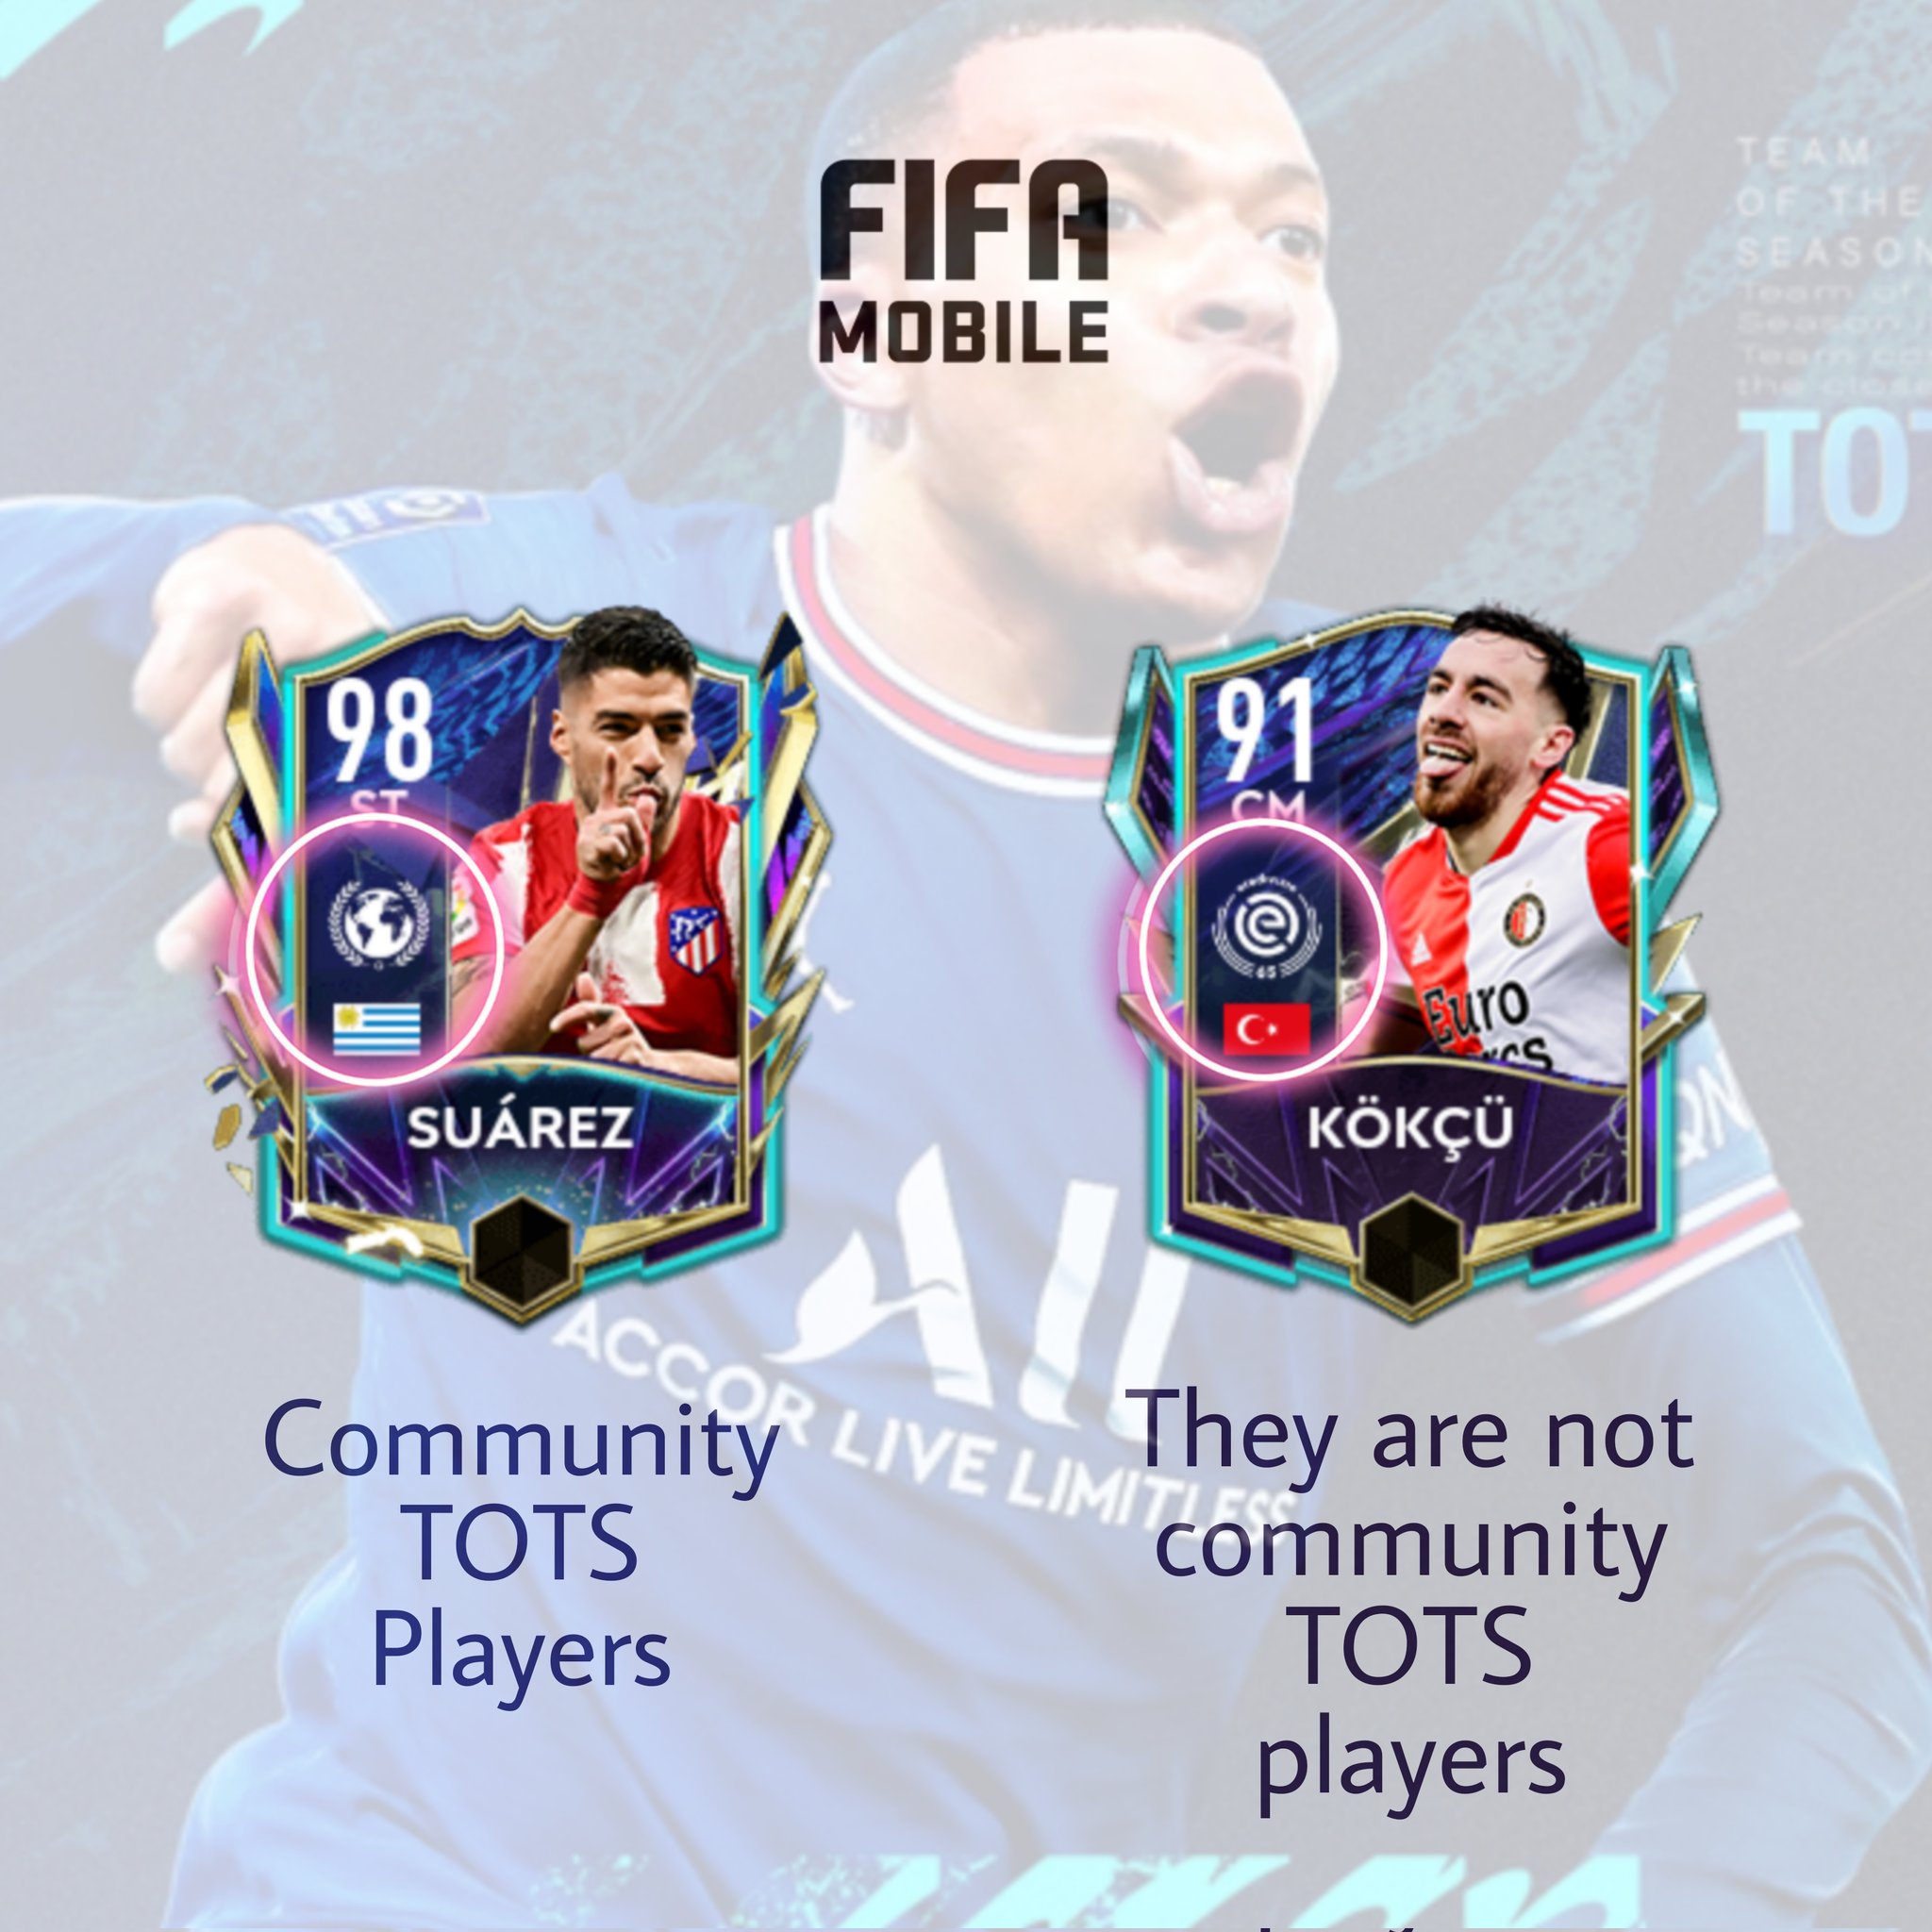 FIFA Mobile 22 (Concept) : r/FifaMobile